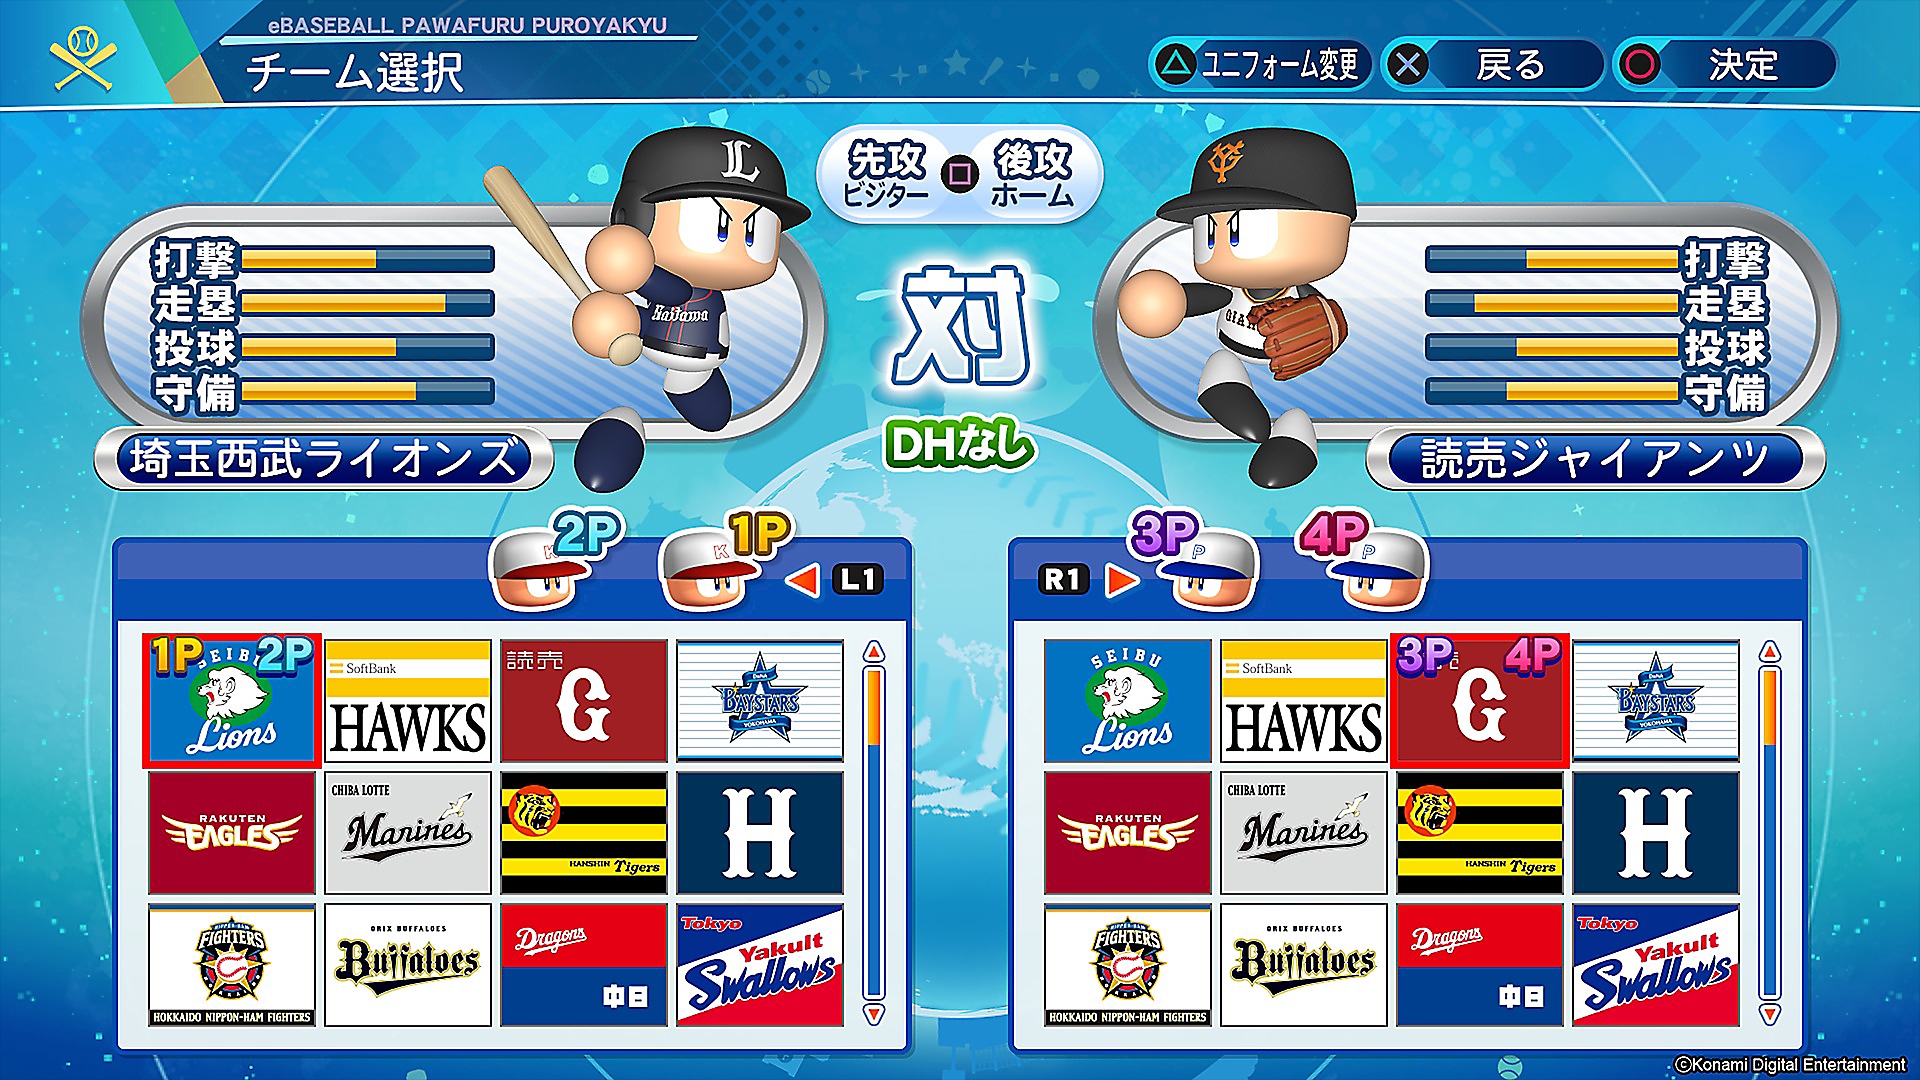 eBASEBALLパワフルプロ野球2020 Gallery Screenshot 8